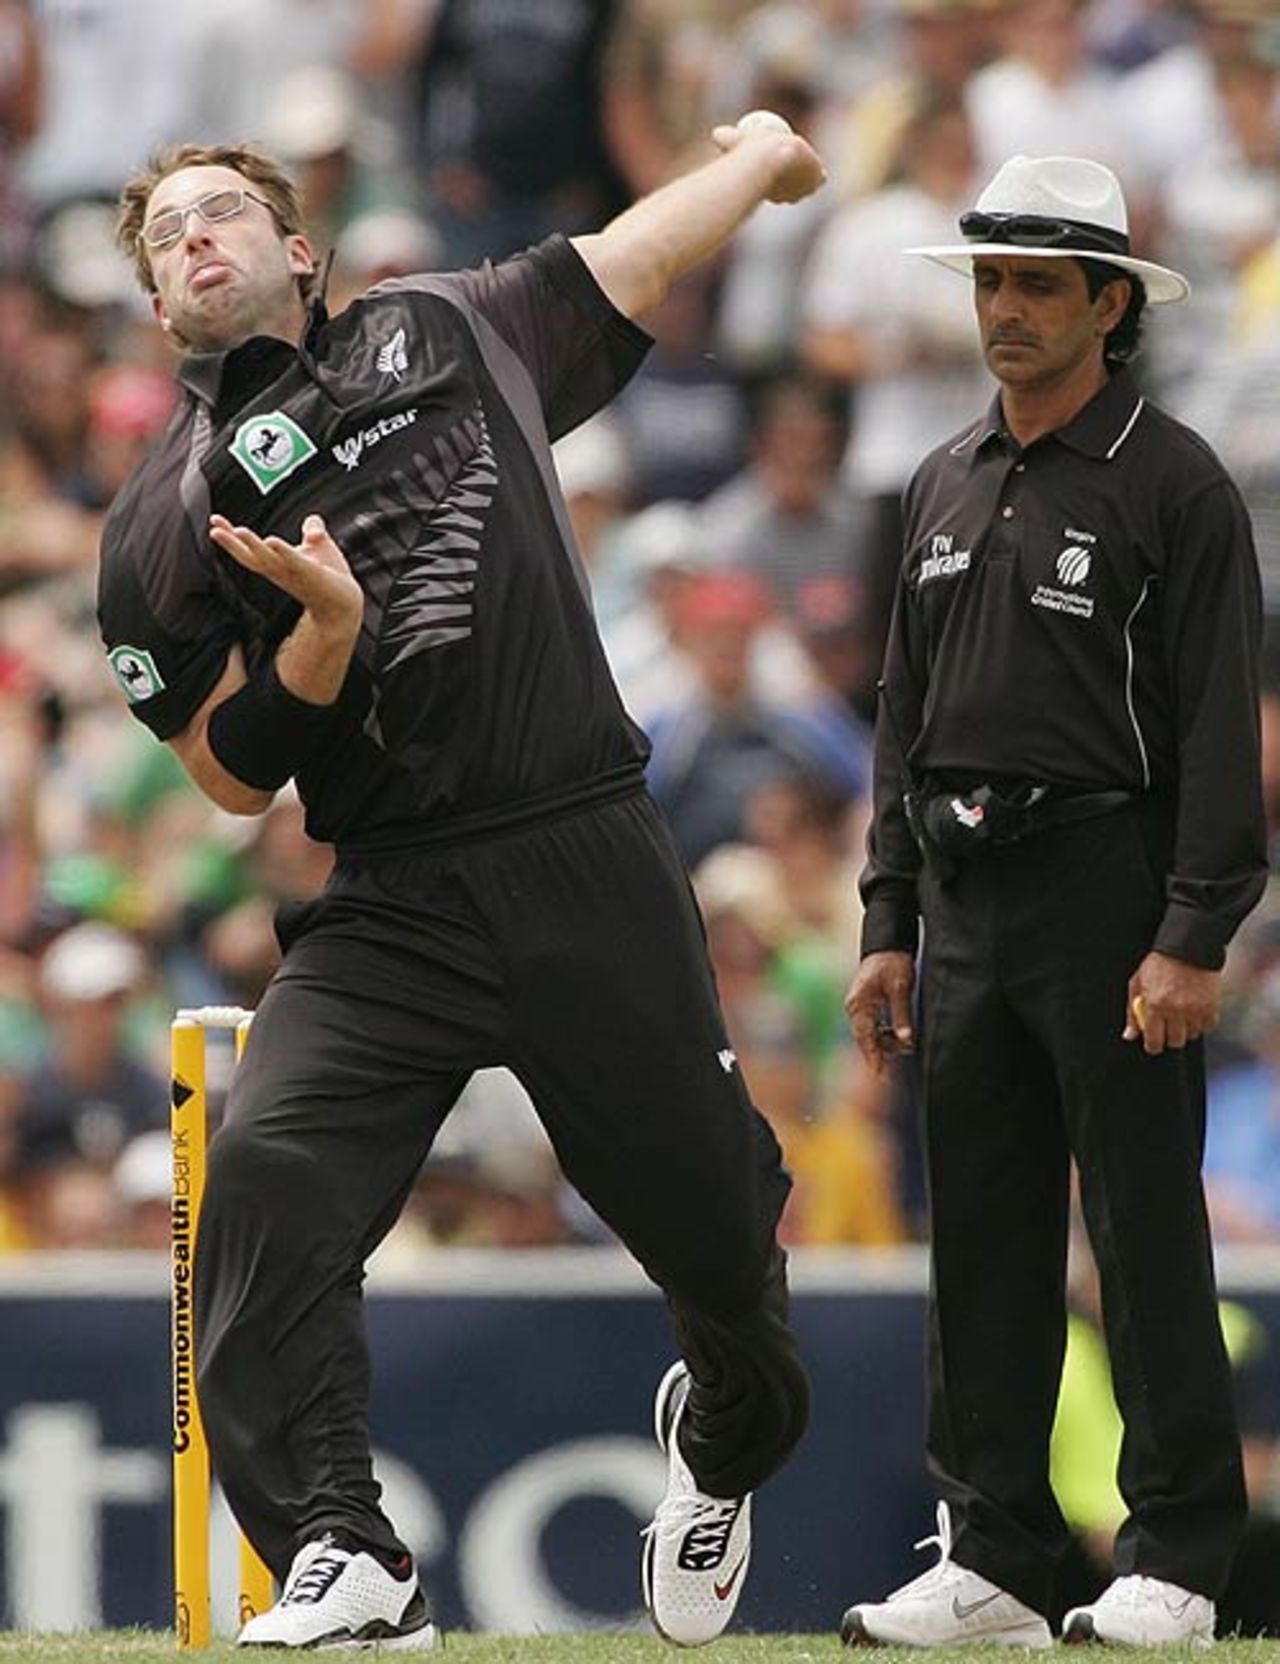 Daniel Vettori bowls as he restricts Australias scoring, Australia v New Zealand, CB Series, 2nd match, Hobart, January 14, 2007